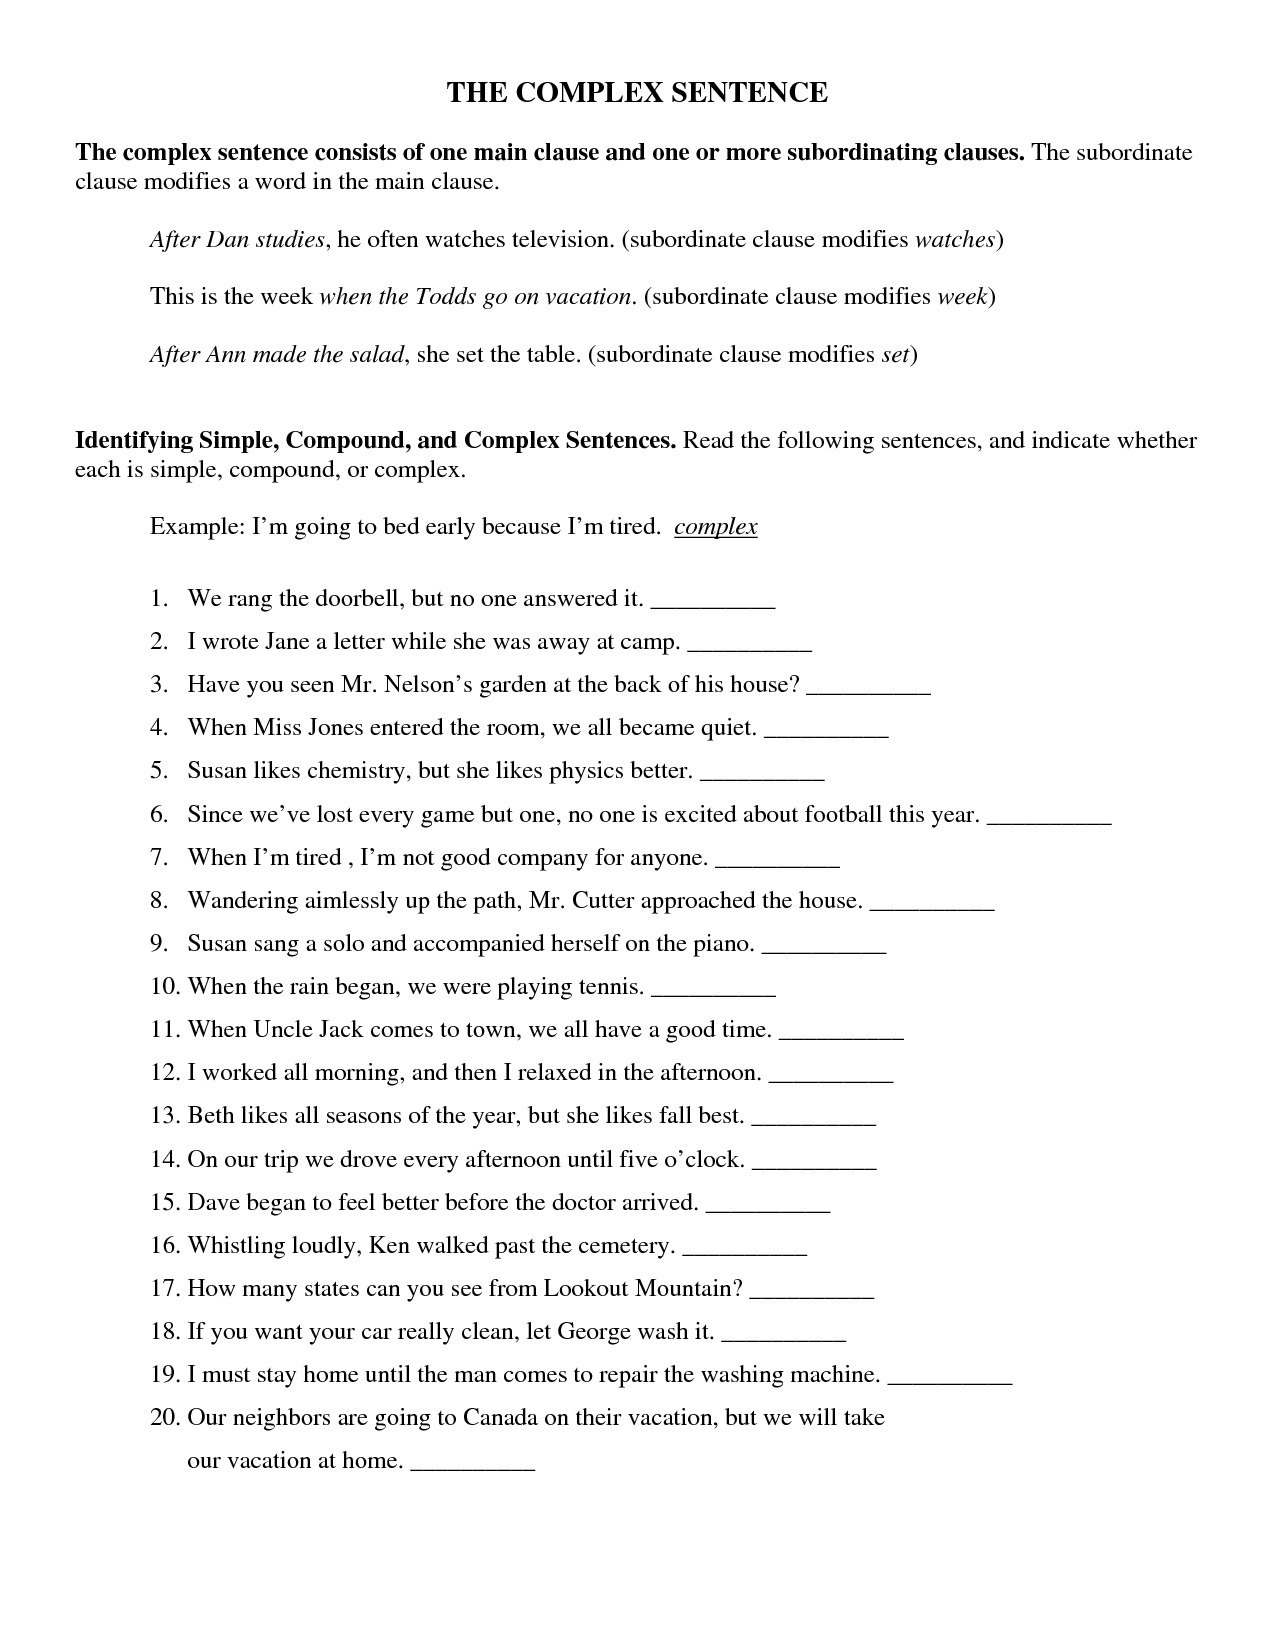 complex-and-compound-sentences-worksheet